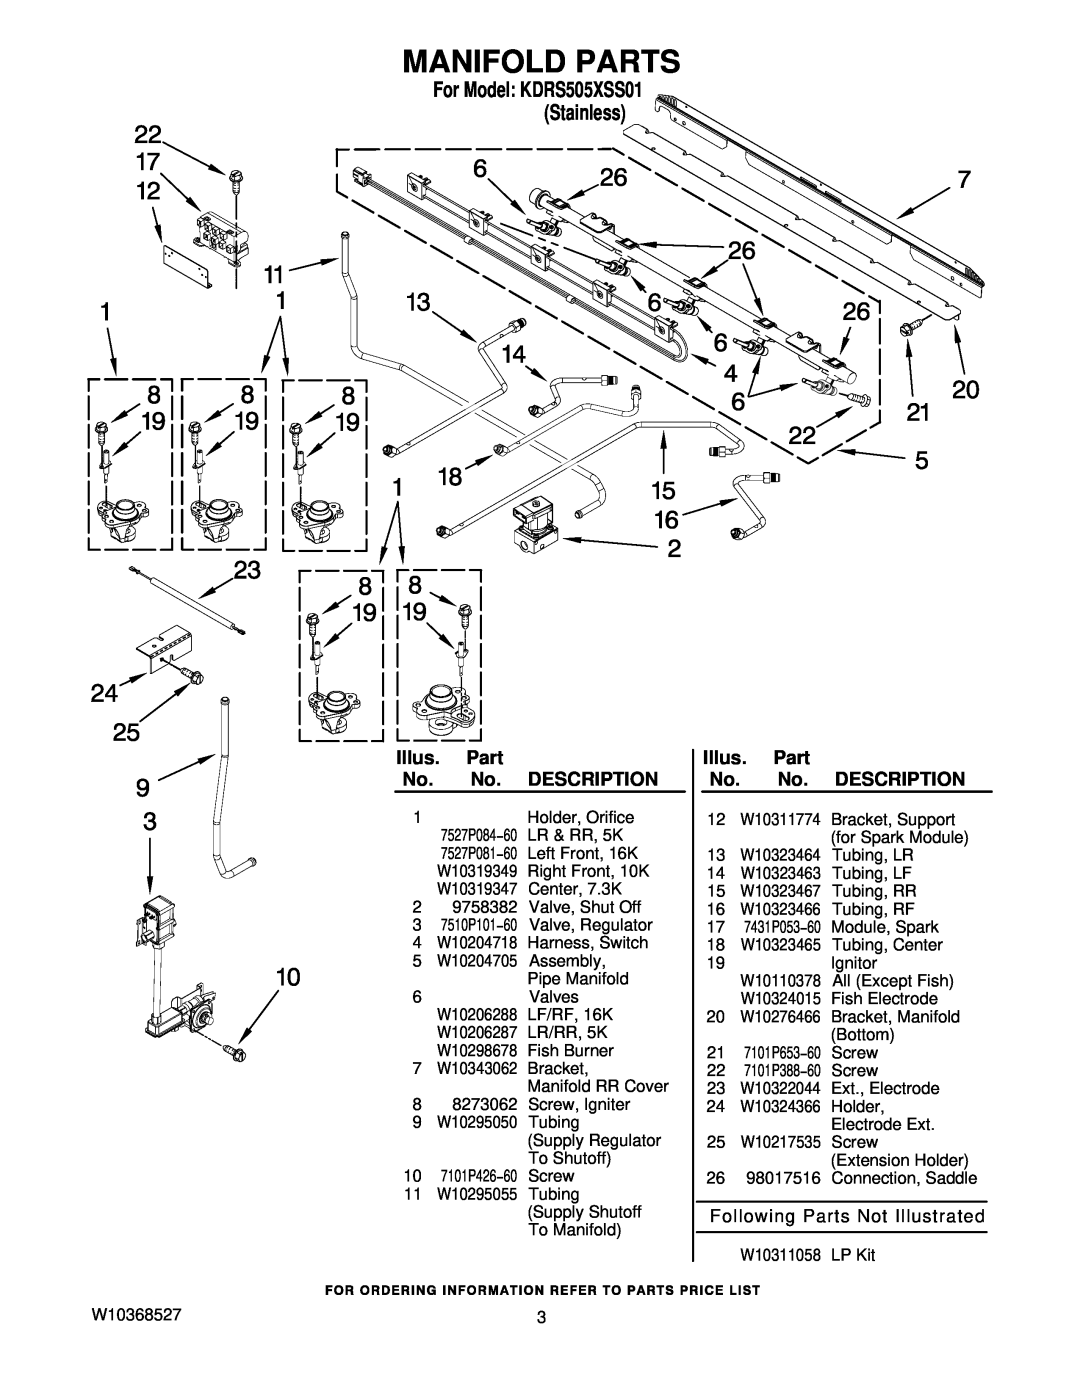 KitchenAid Kdrs505xss01 owner manual Manifold Parts, Following Parts Not Illustrated, Illus. Part No. No. DESCRIPTION 